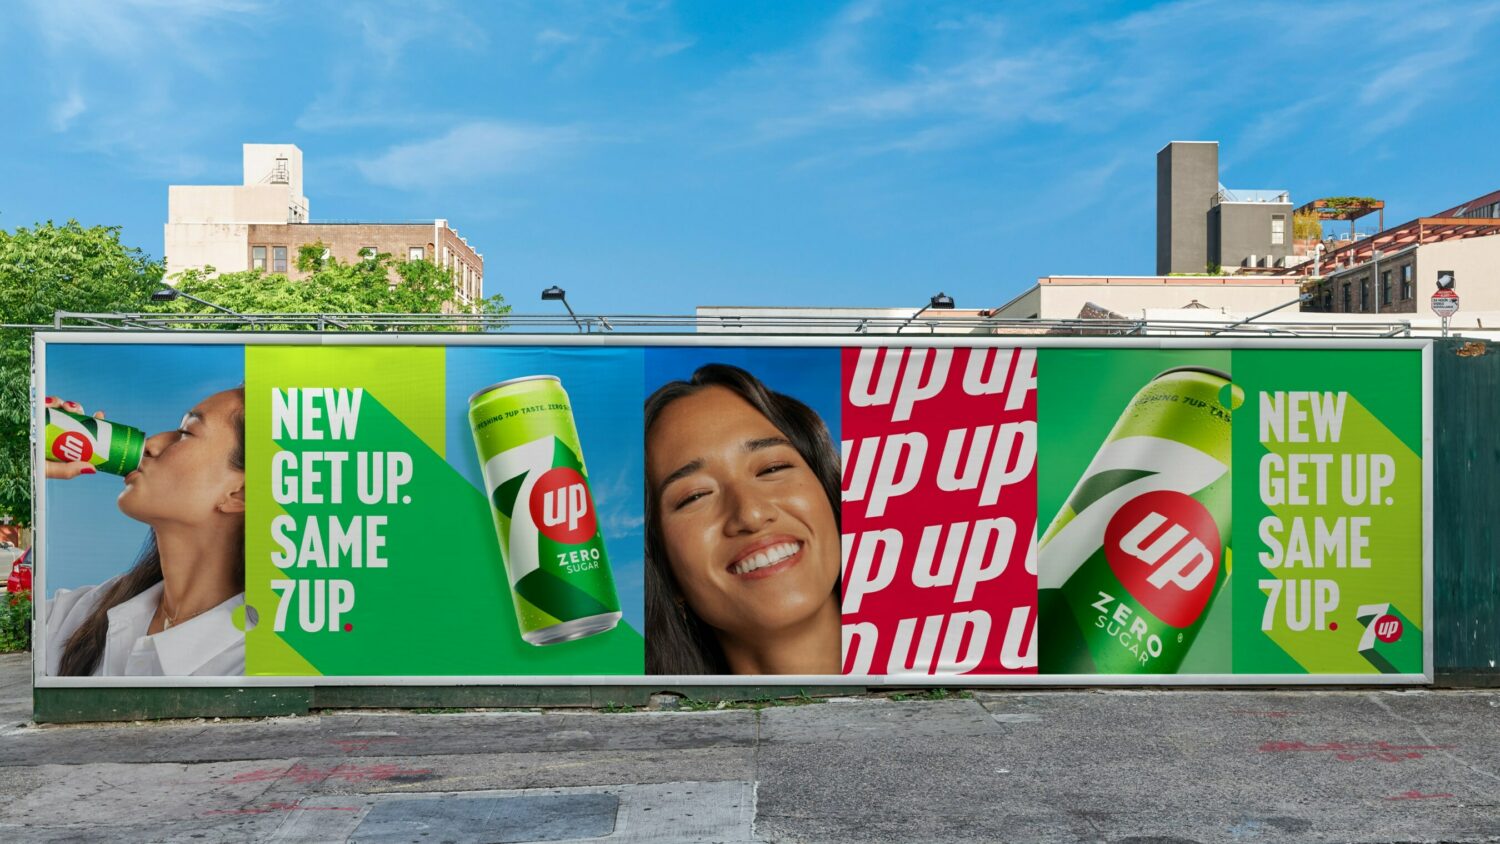 7UP Billboard, Quelle: PepsiCo